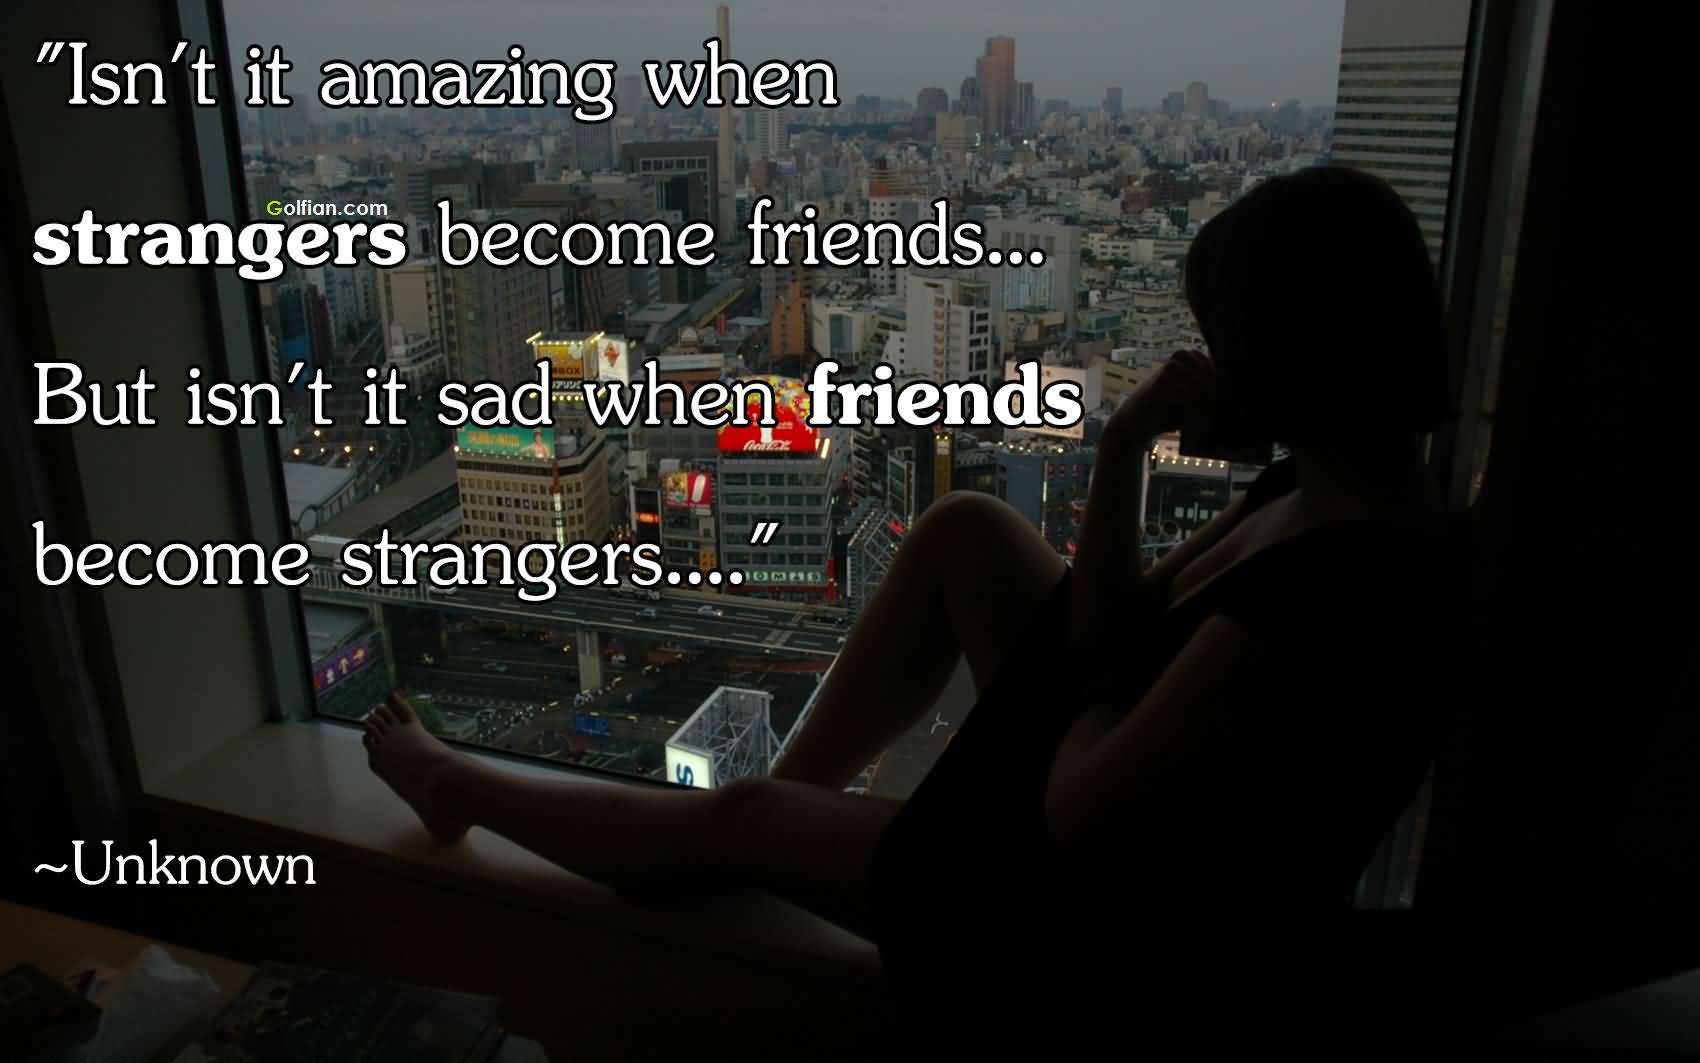 Sad Friendship Quotes Image